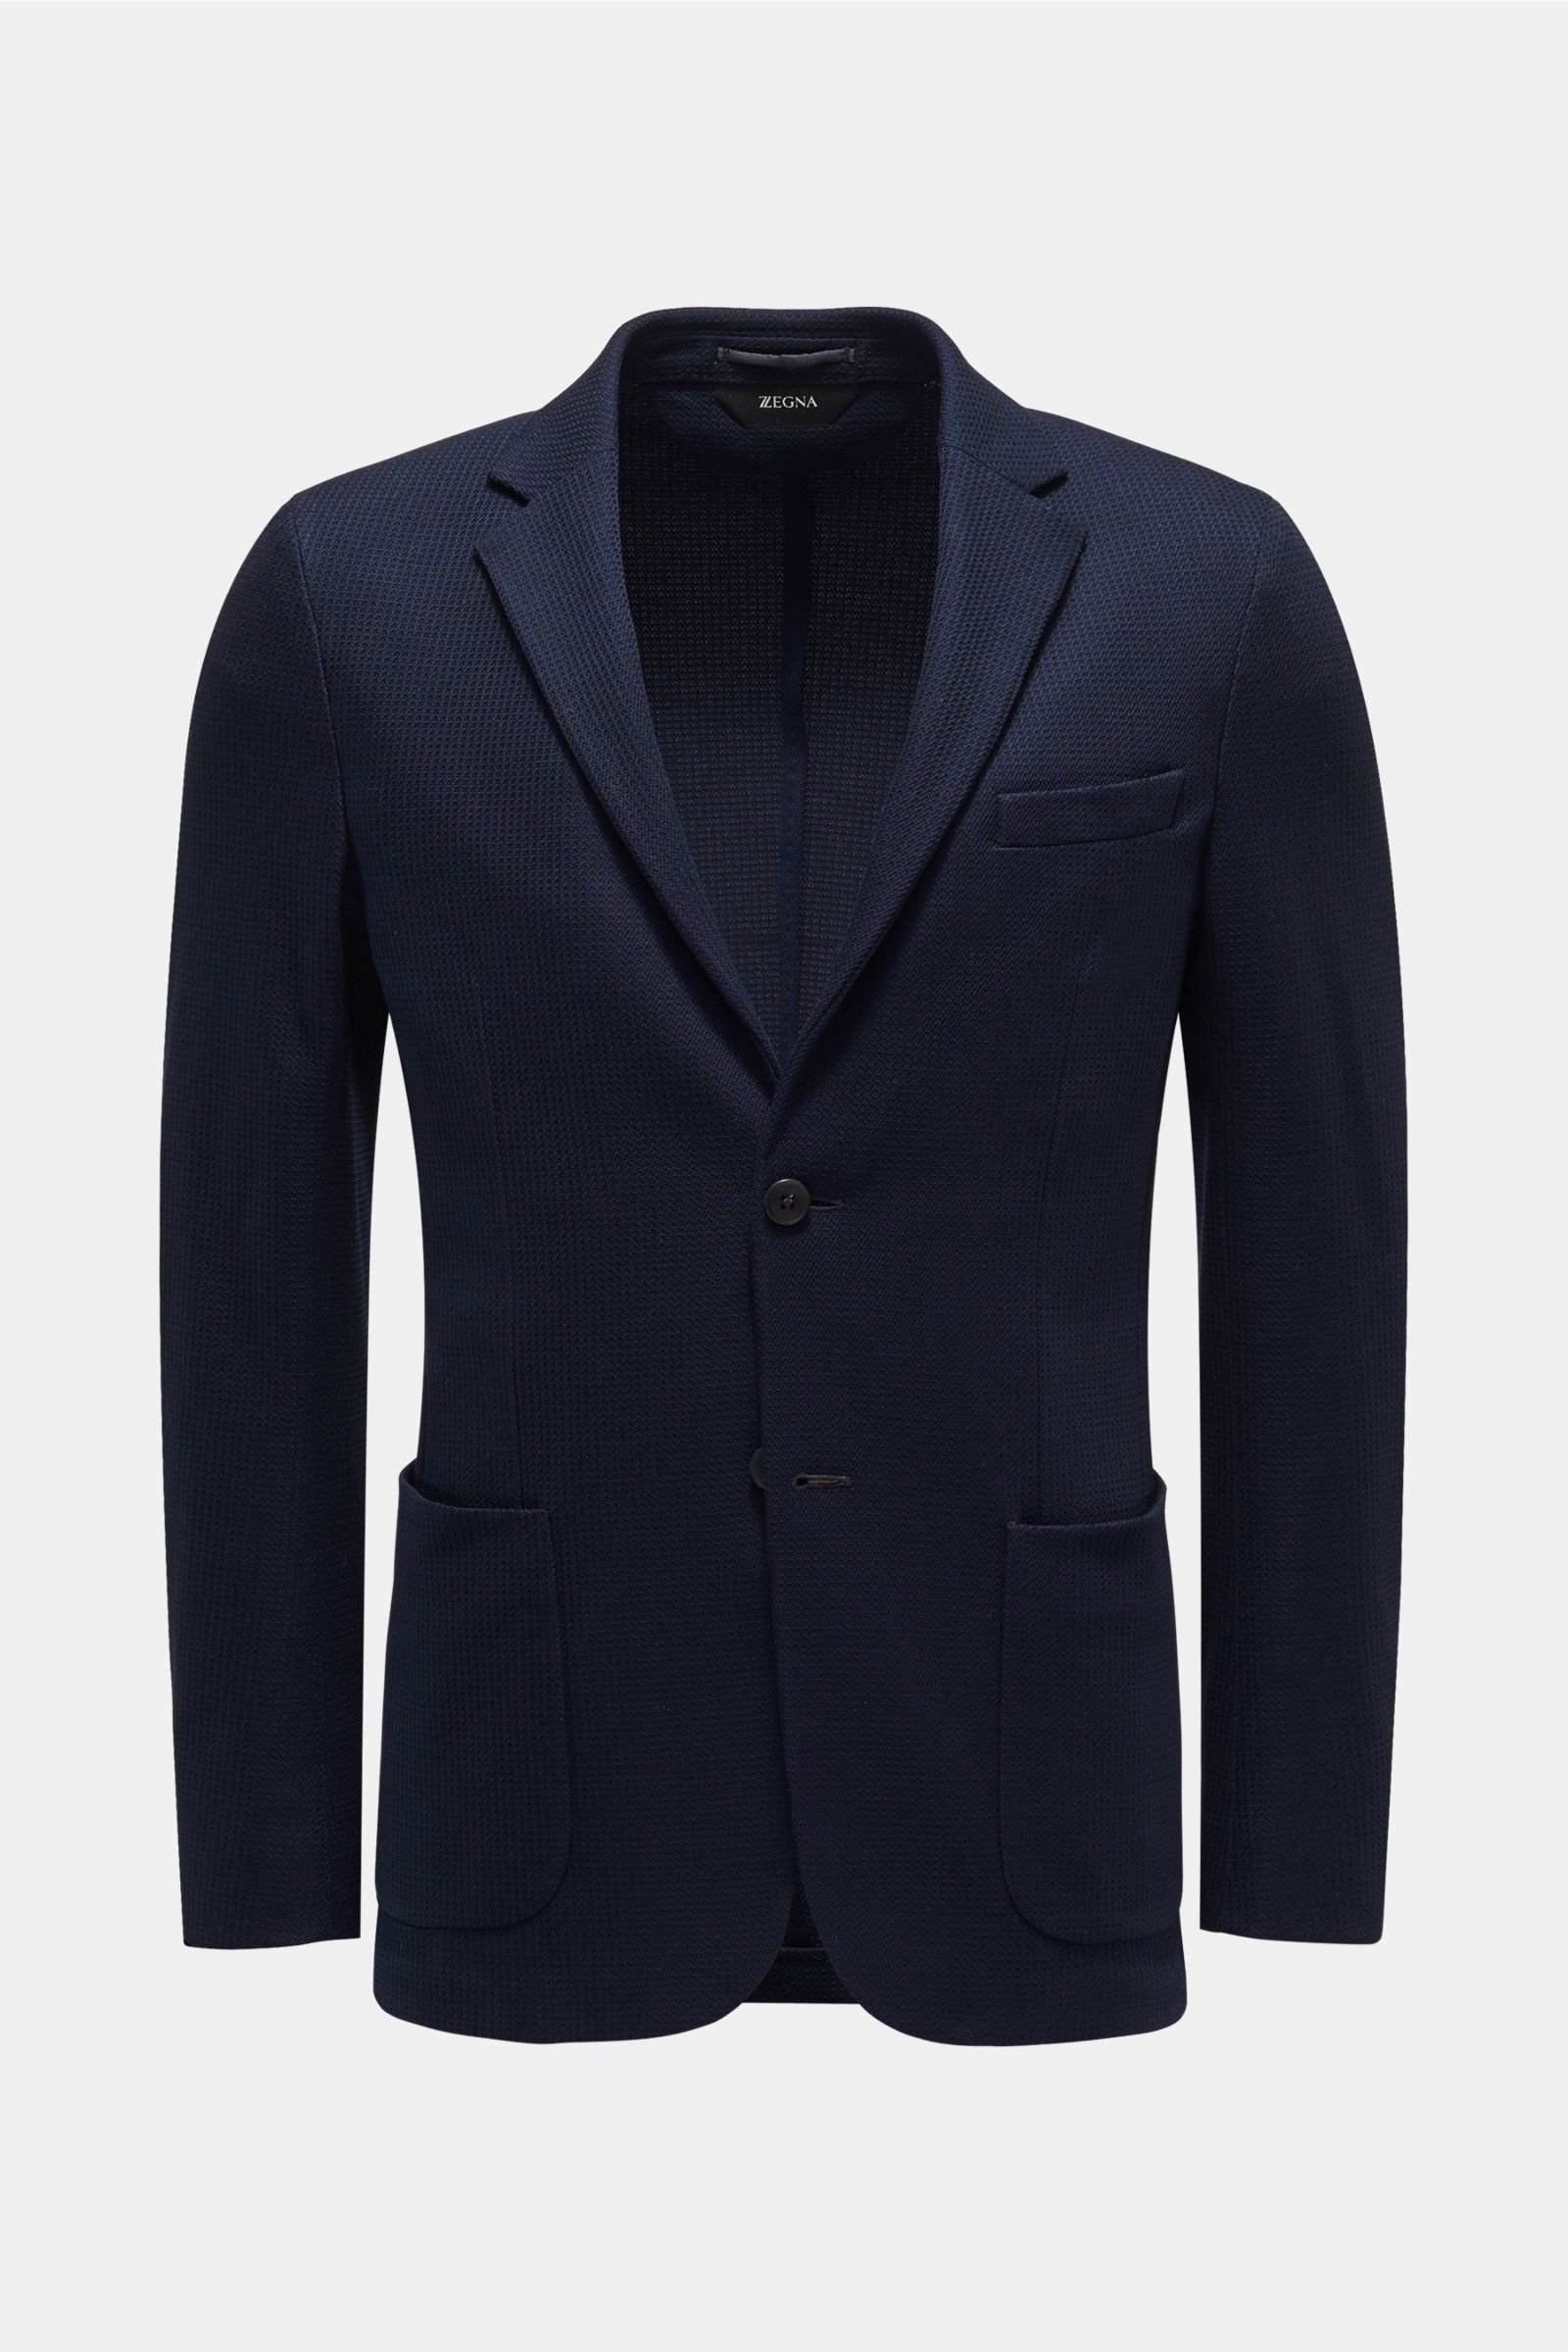 Jersey smart-casual jacket 'Shirt drop 7' navy